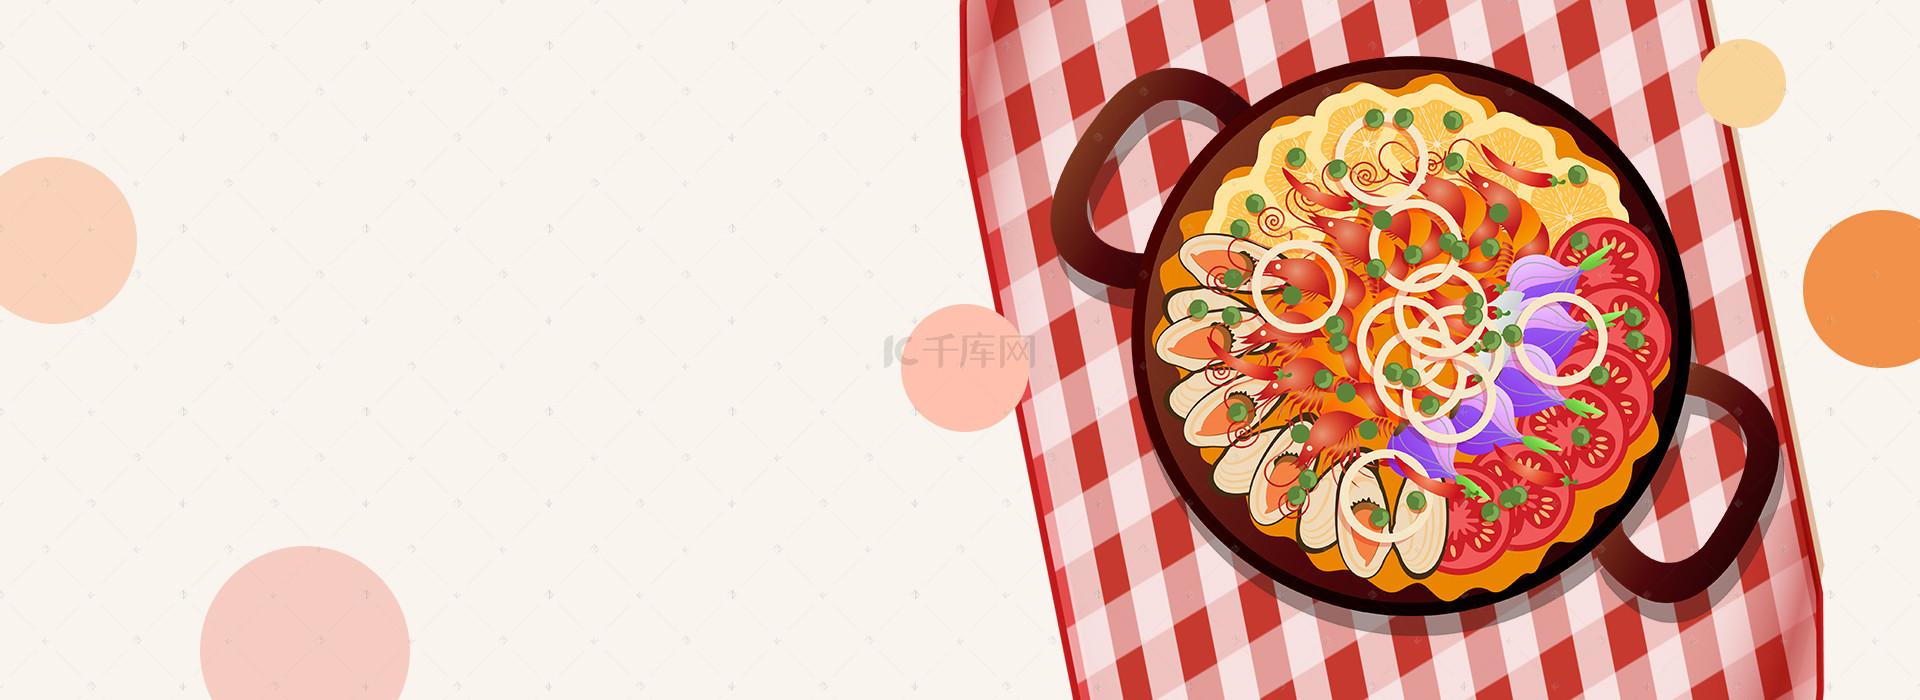 pizza背景图片_美味披萨手绘文艺黄色banner